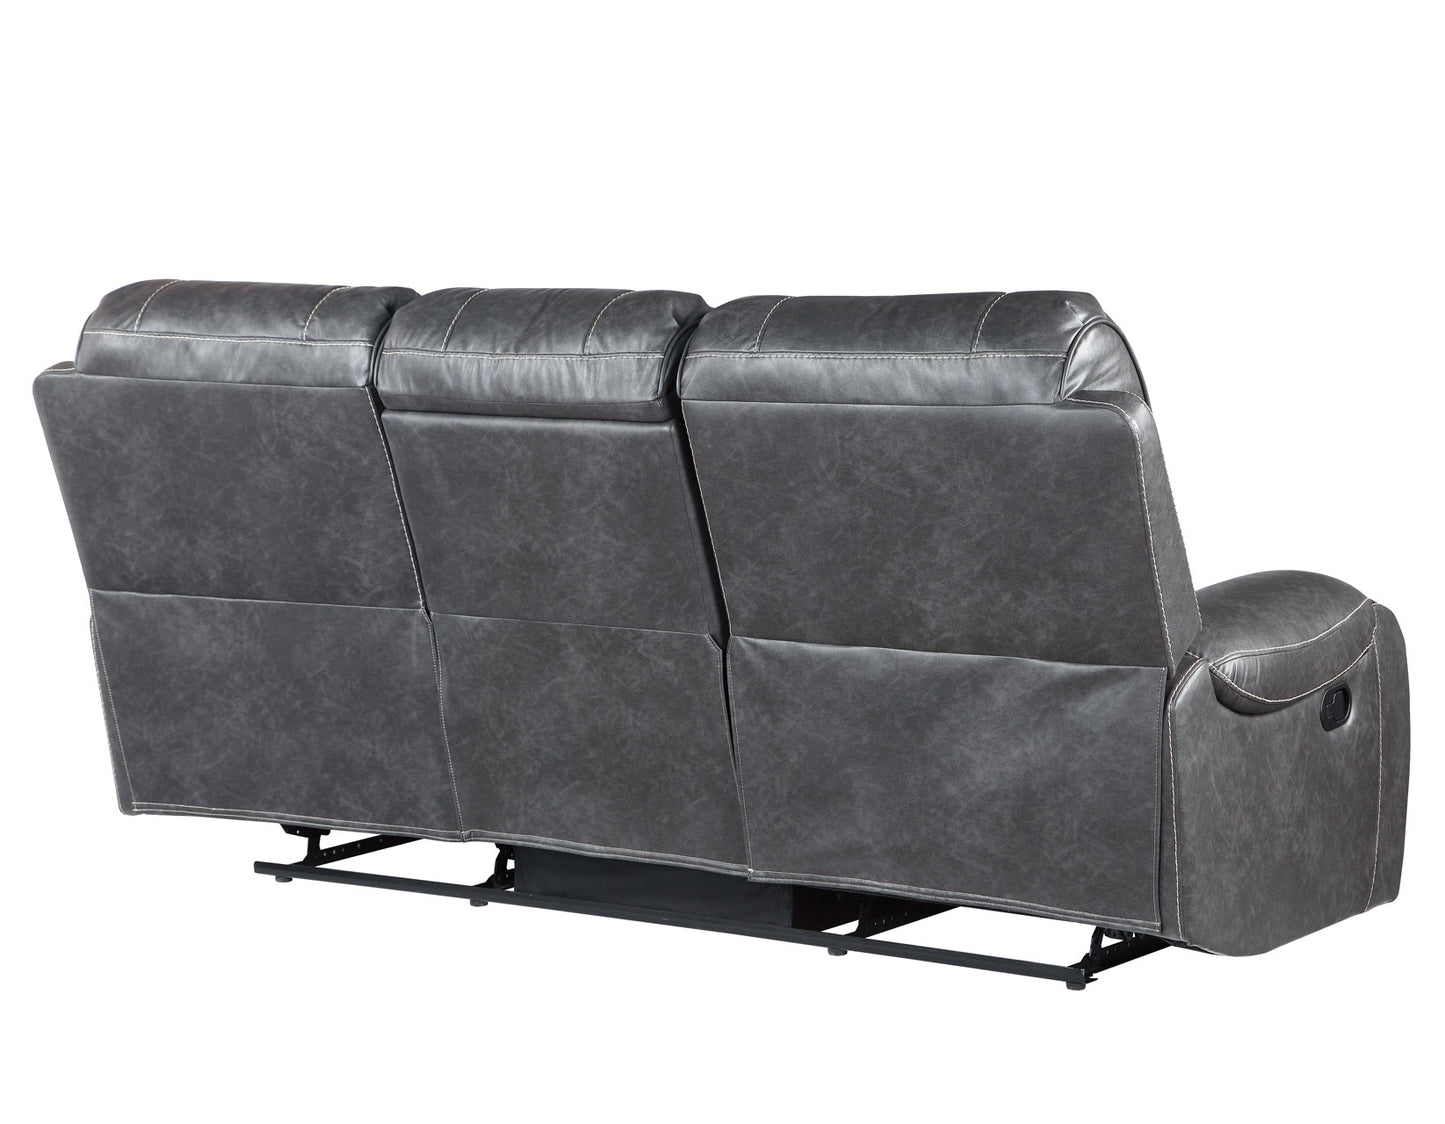 Keily Manual Reclining Sofa w/Dropdown Table, Grey